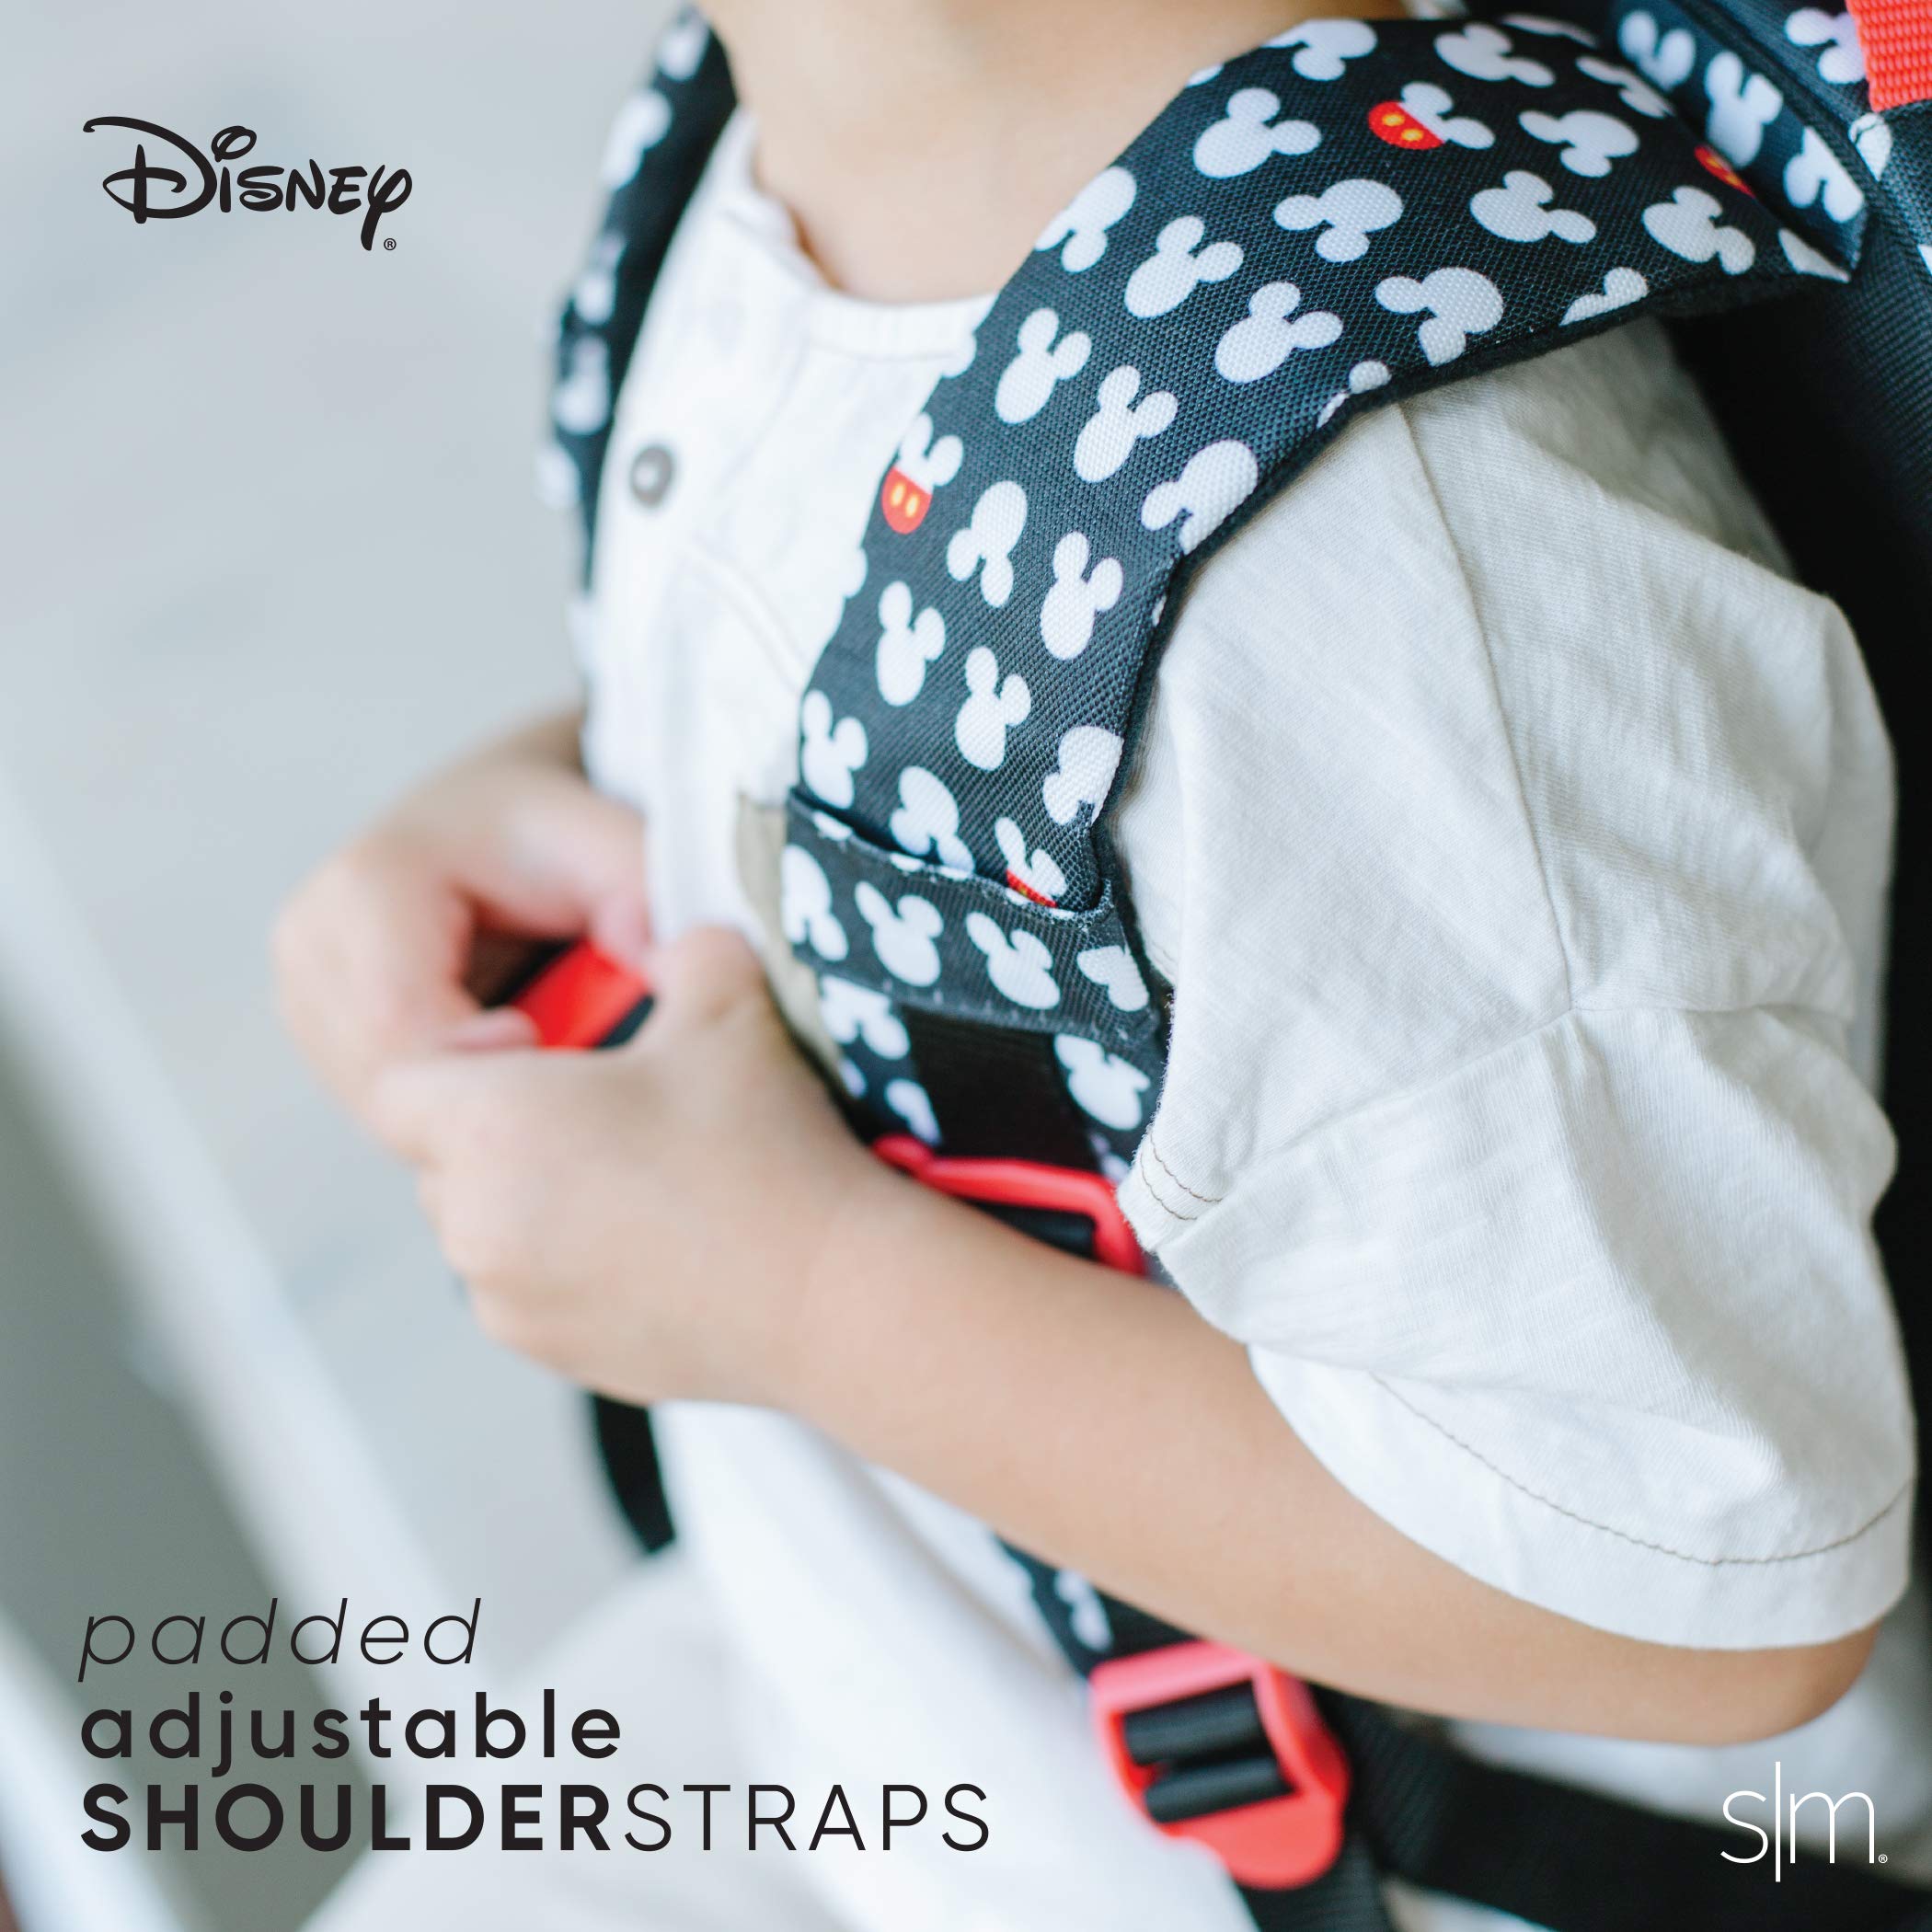 Simple Modern Disney Toddler Backpack for School Girls | Kindergarten Elementary Kids Backpack | Fletcher Collection | Kids - Medium (15